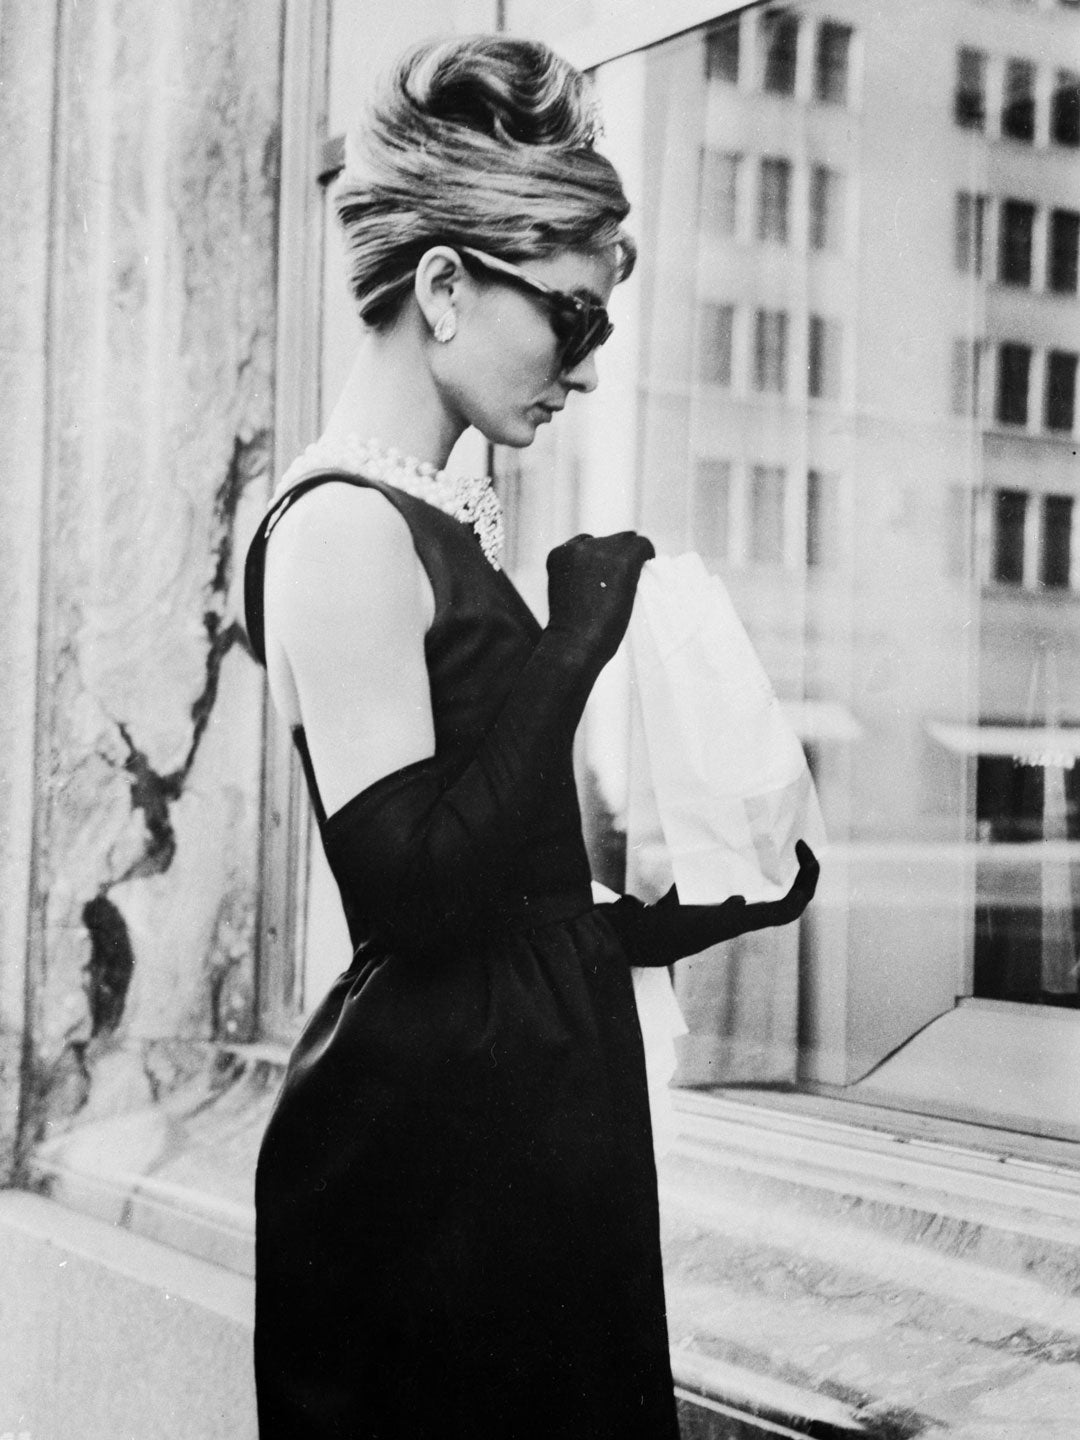 Audrey Hepburn outside Tiffany's New York wearing sunglasses and black dress